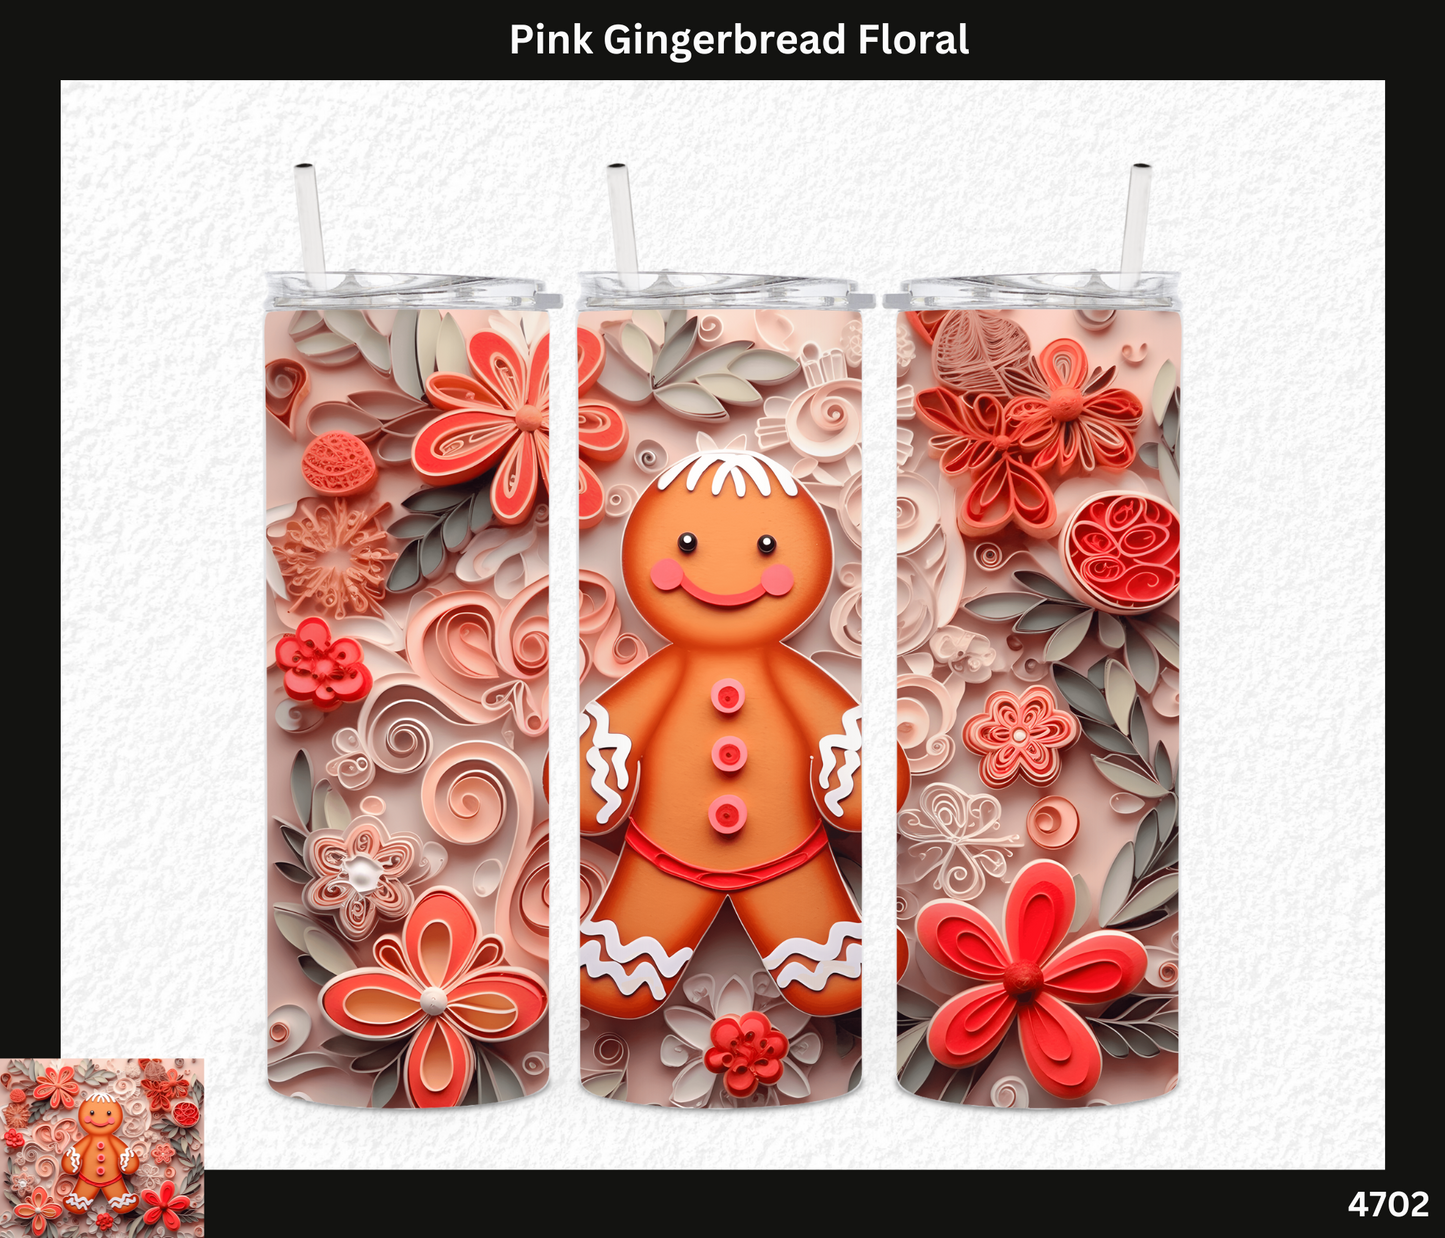 Pink Gingerbread Floral